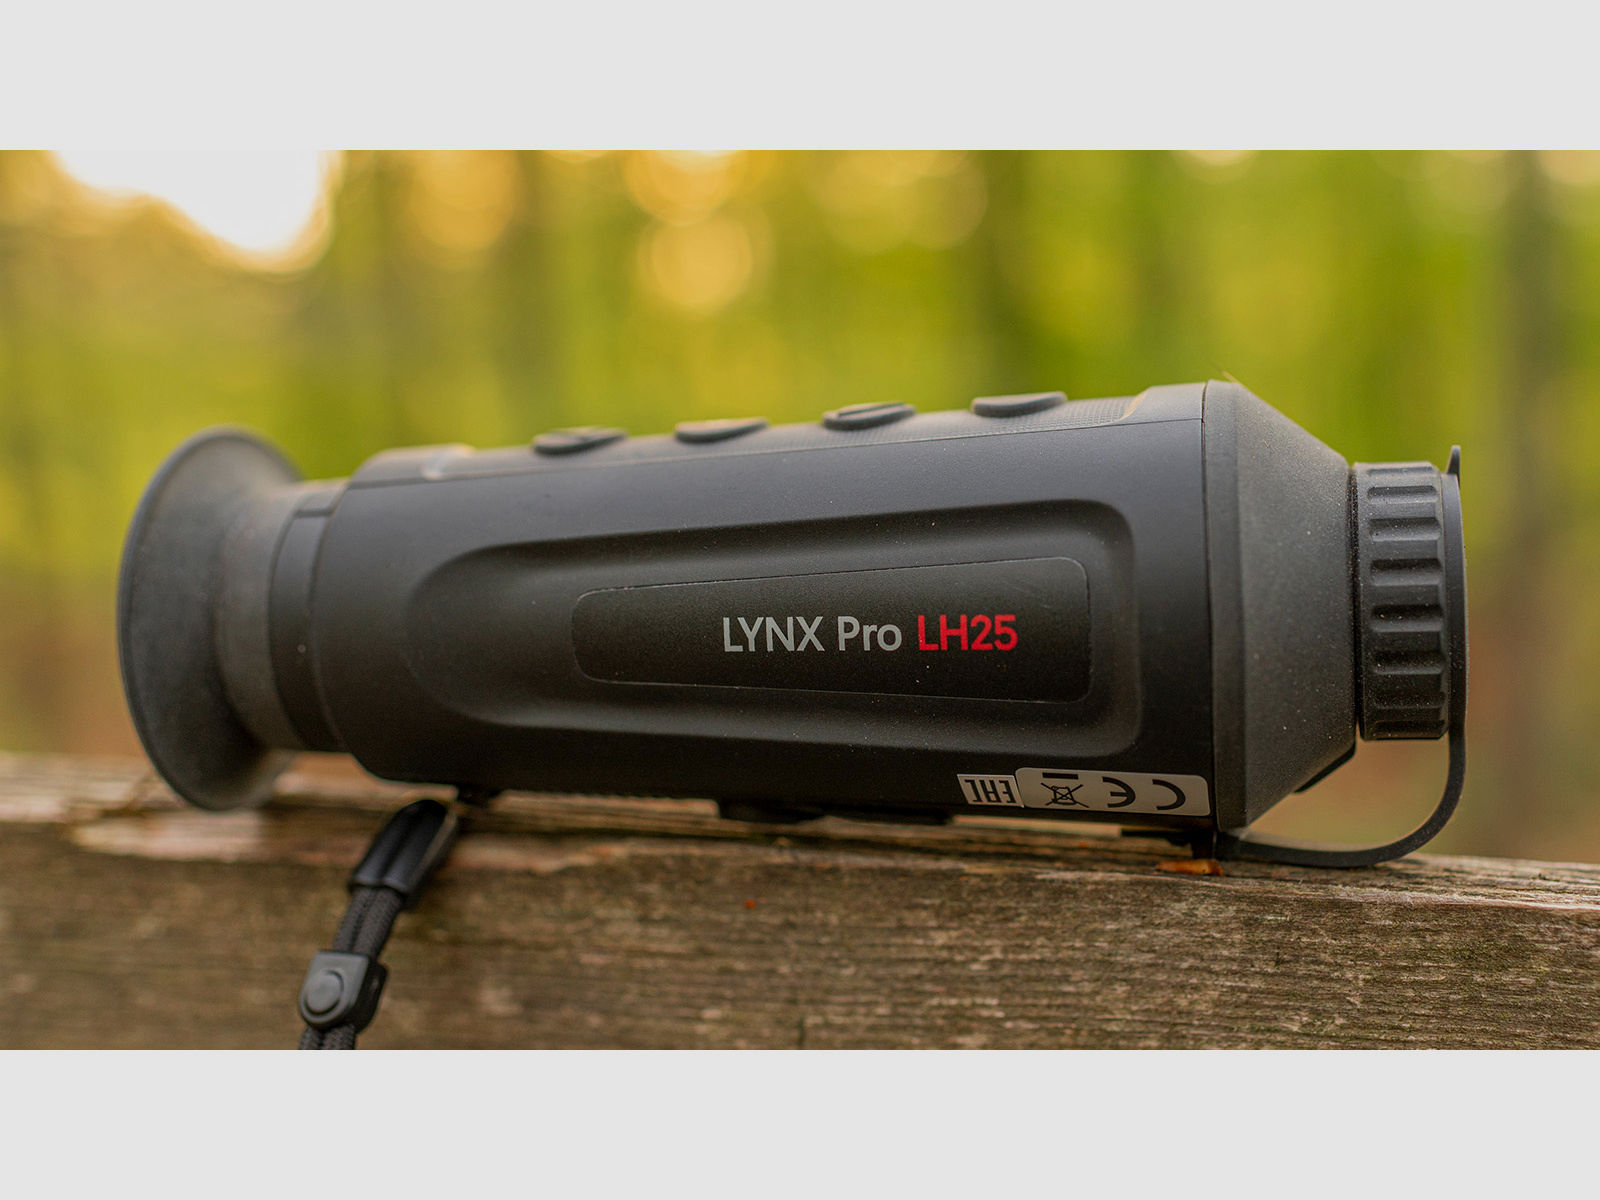 HIKMICRO Lynx Pro LH25